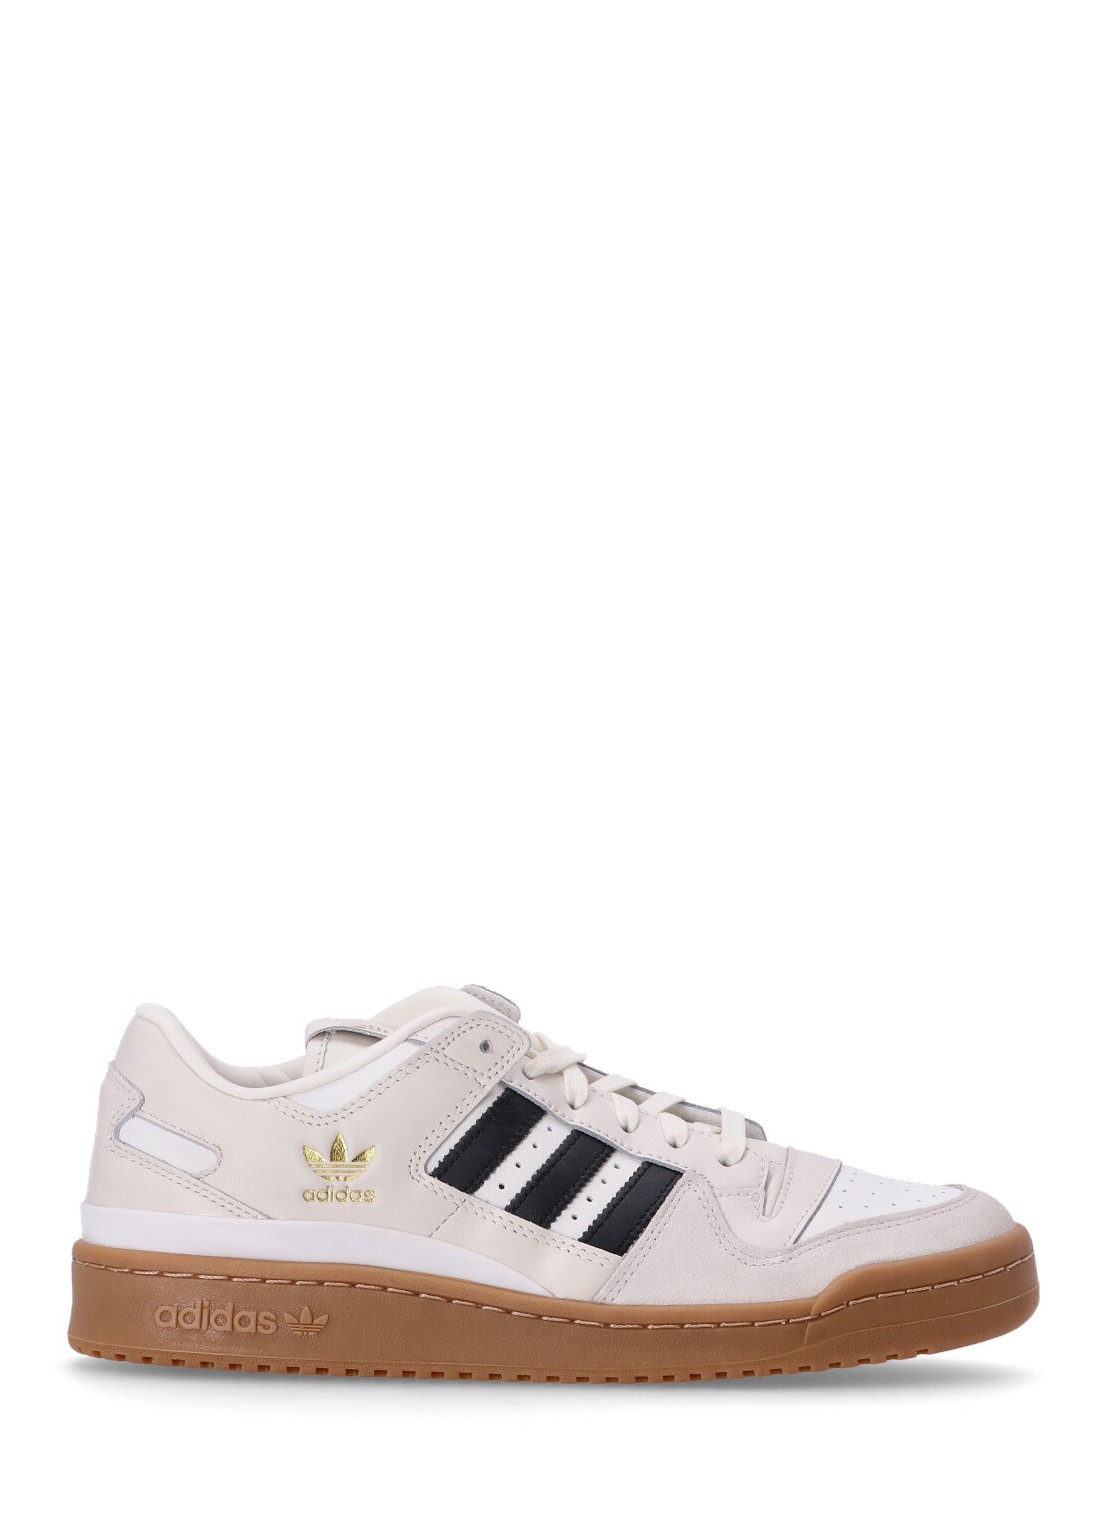 Sneaker adidas originals sneaker man forum 84 low cl ig3769 clowhi cblack gum4 talla blanco
 